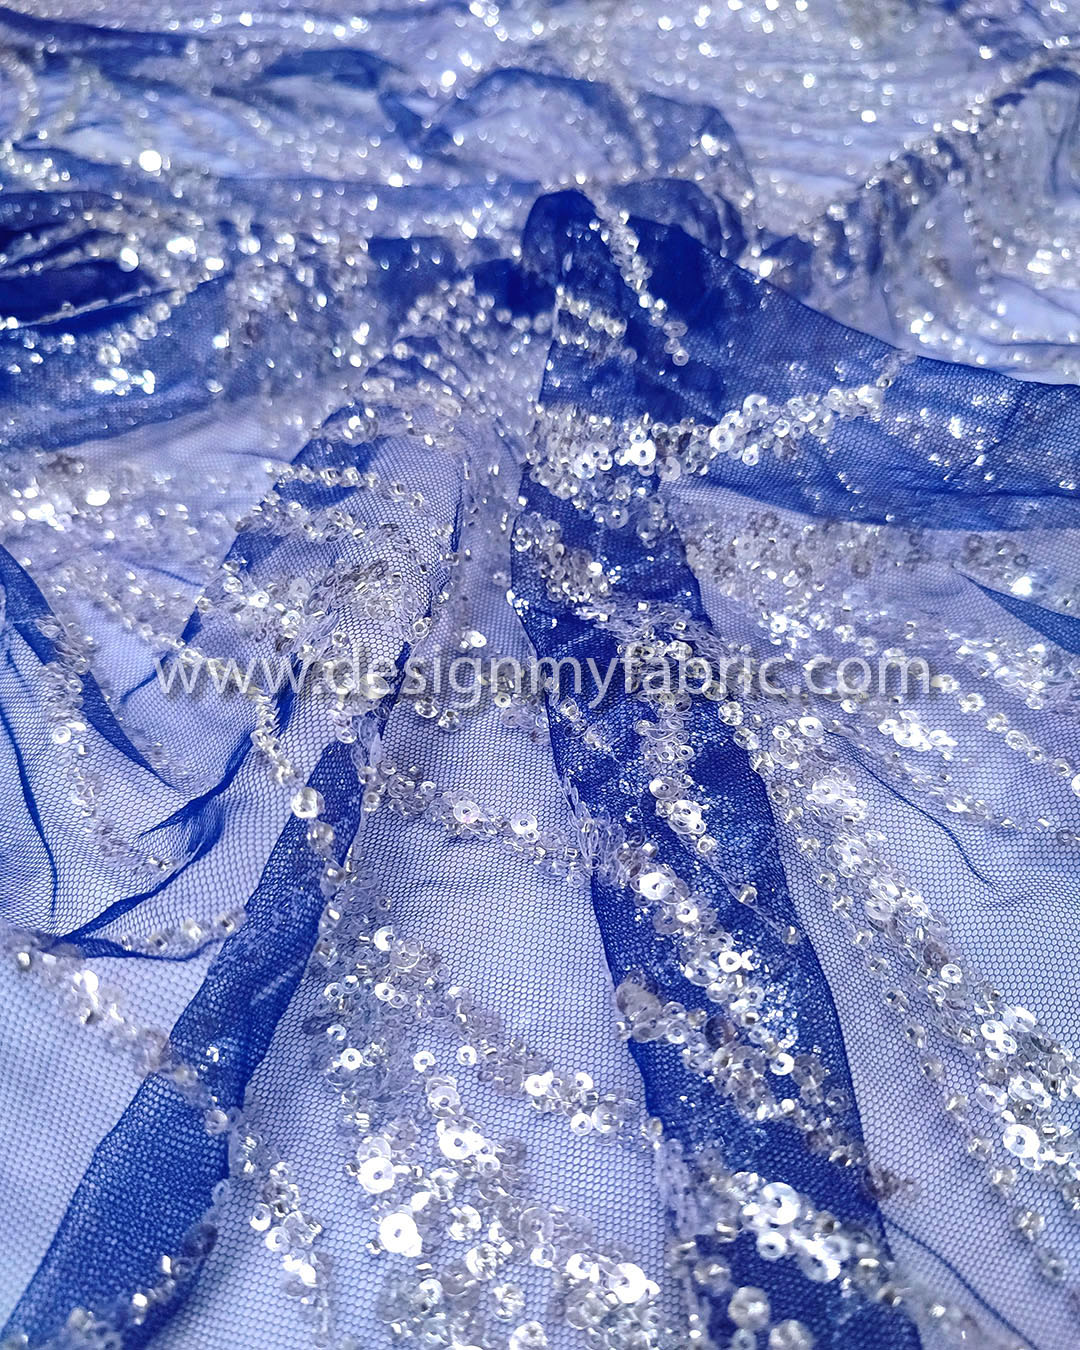 Blue purple rhinestones lace fabric #91966 - Design My Fabric